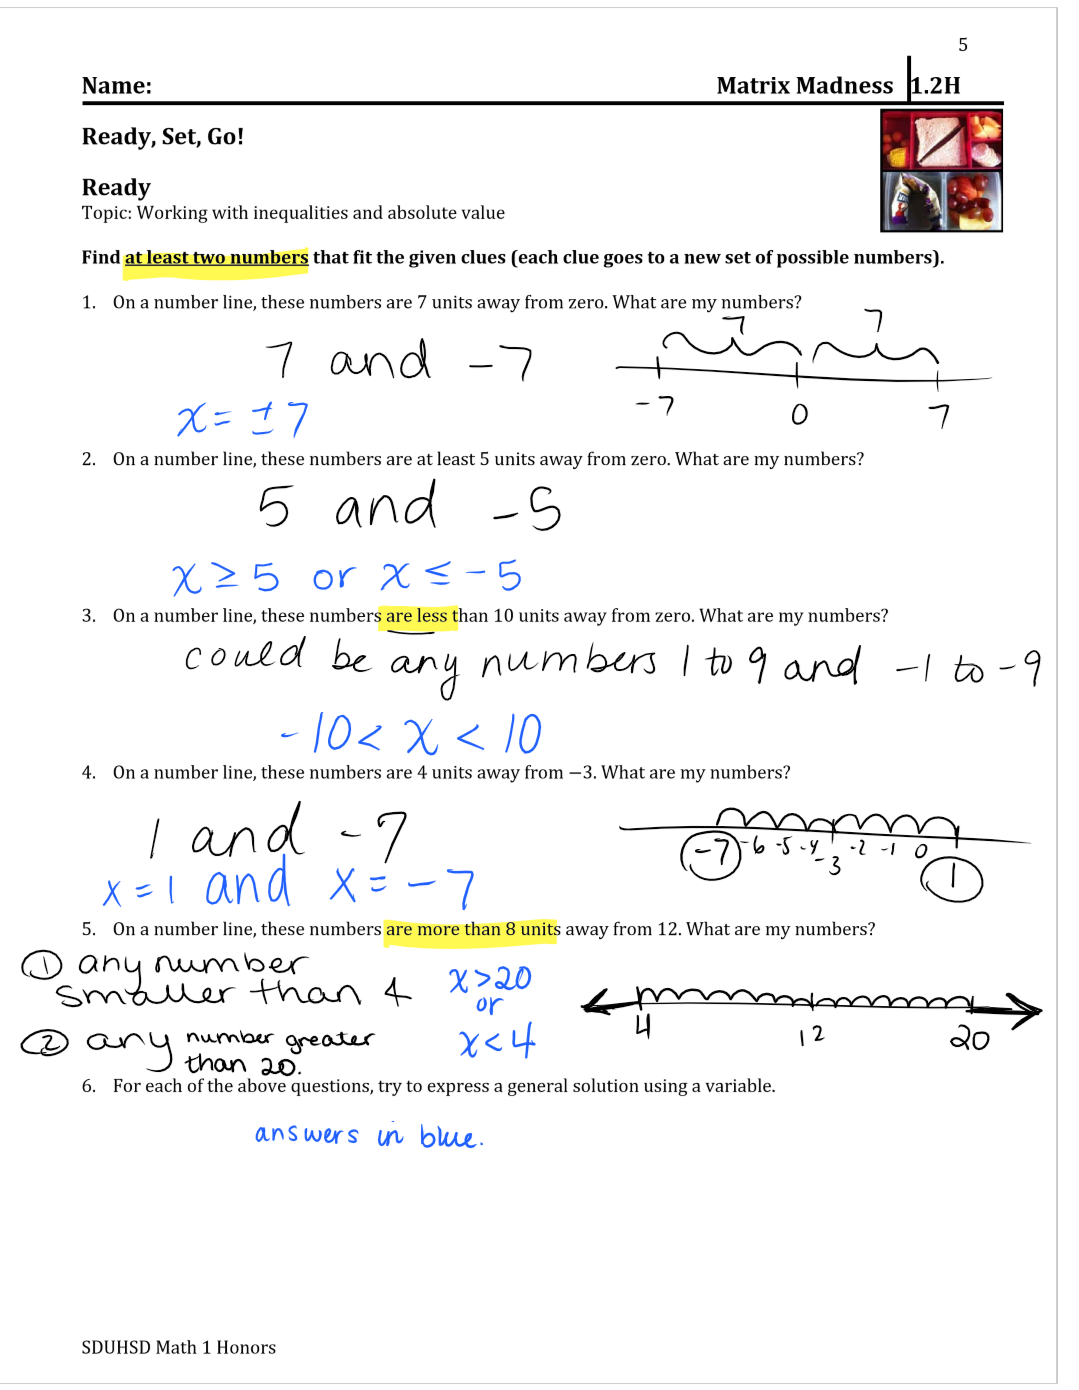 integrated-math-1-worksheets